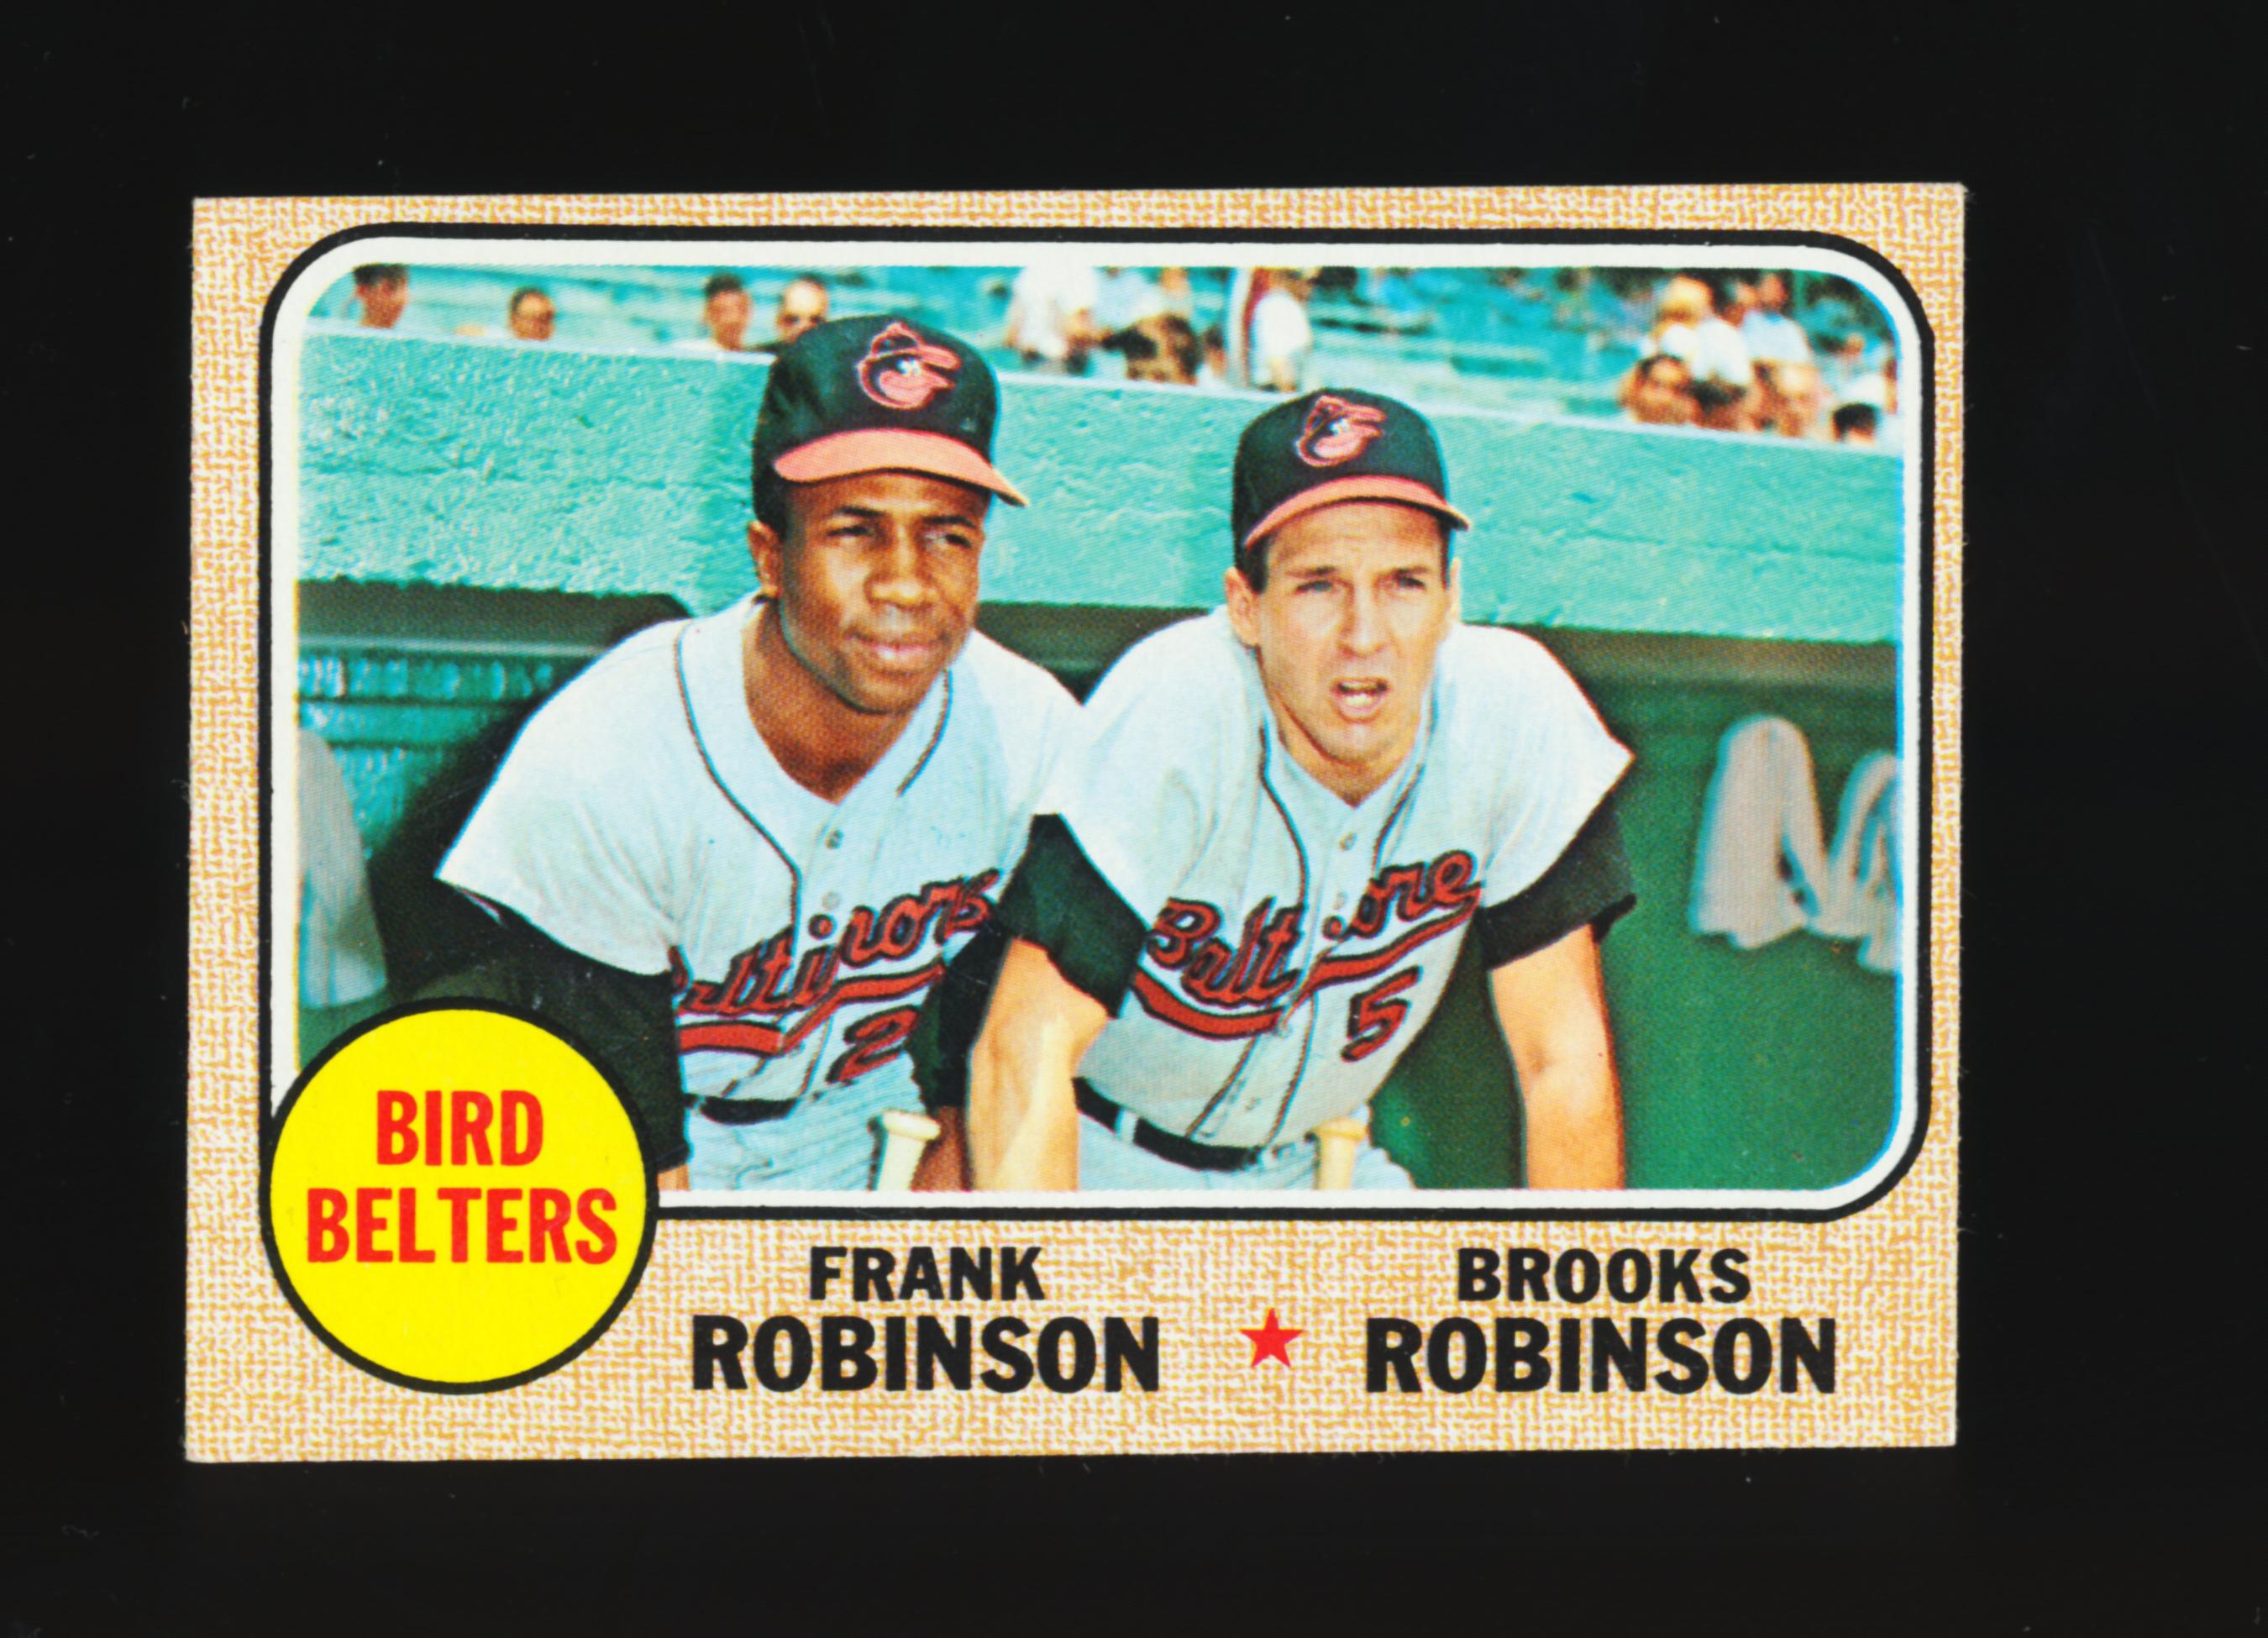 1968 Topps Baseball Card #530 "Bird Belters" Hall of Famers Frank Robinson